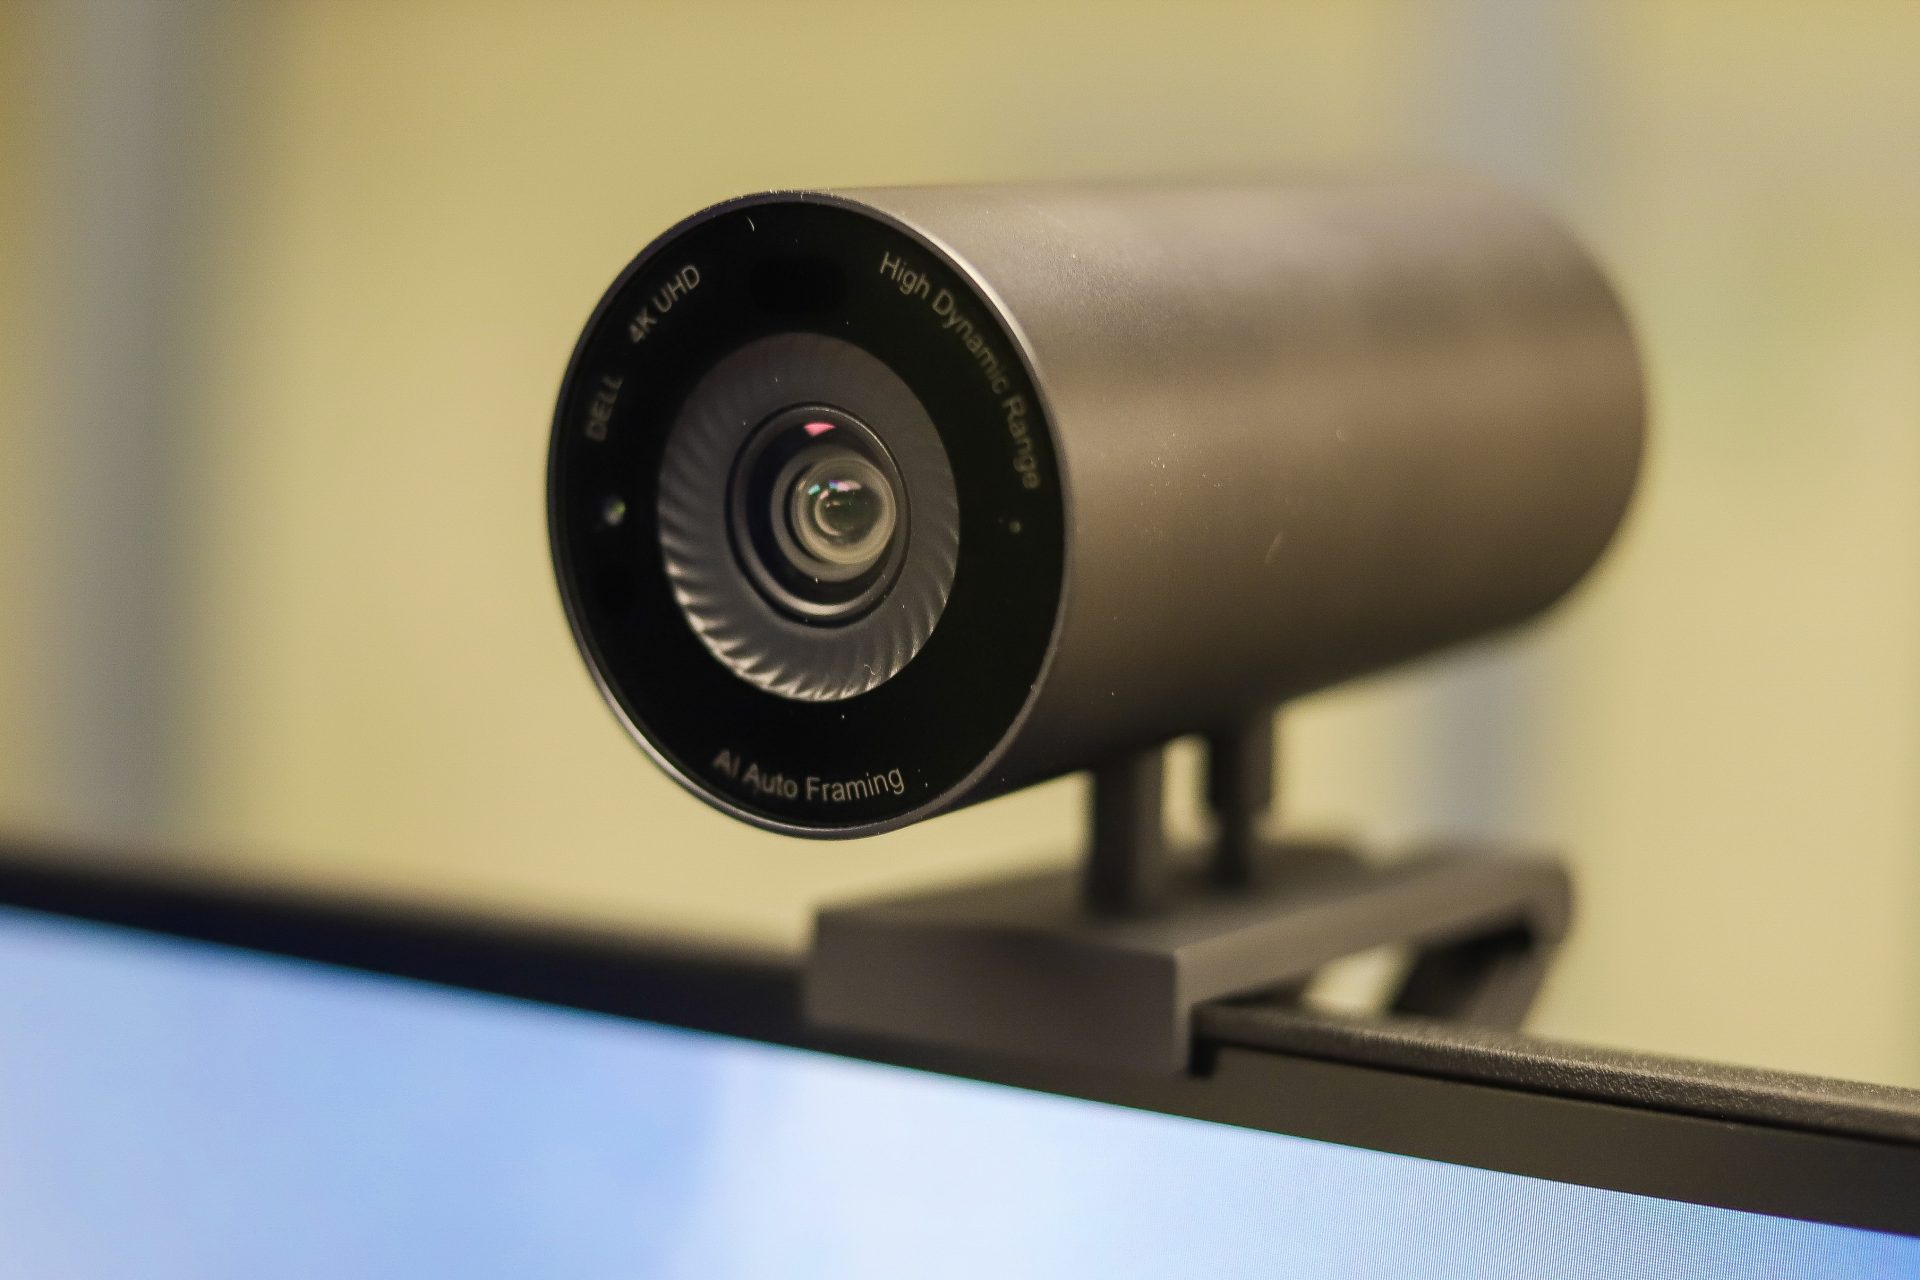 Dell UltraSharp Webcam angle view